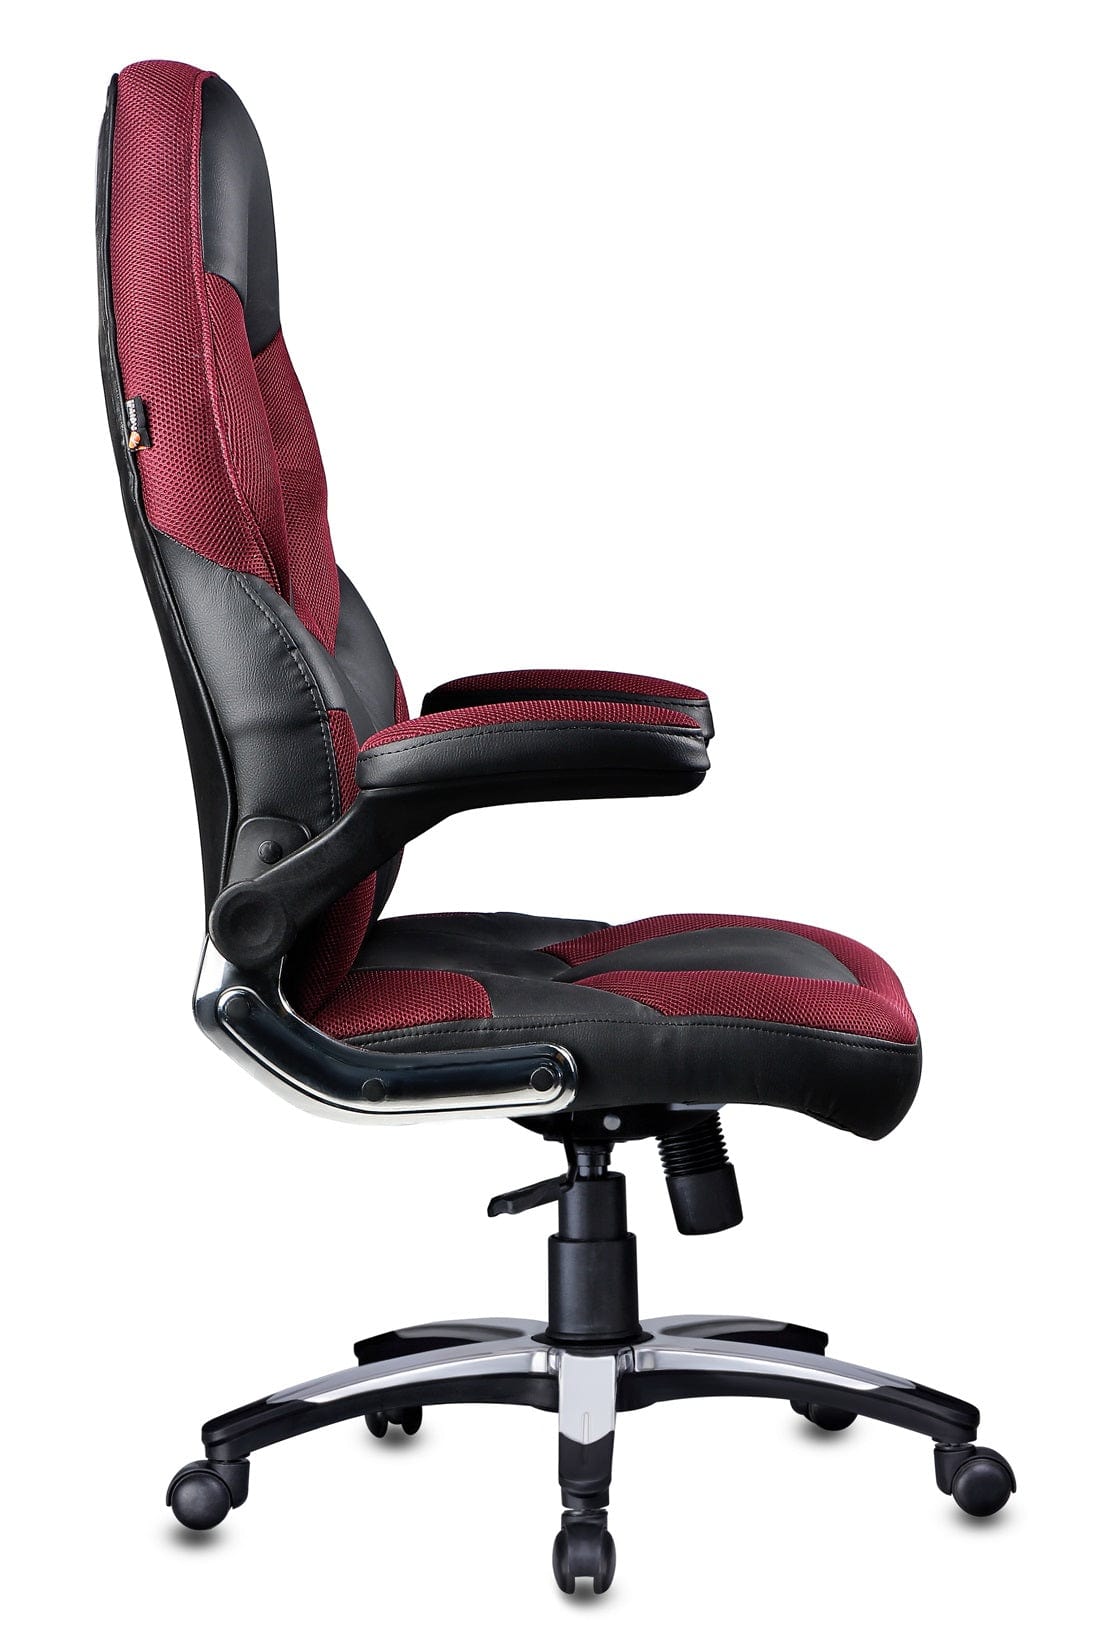 Stylish Designer chair in Black / Maroon